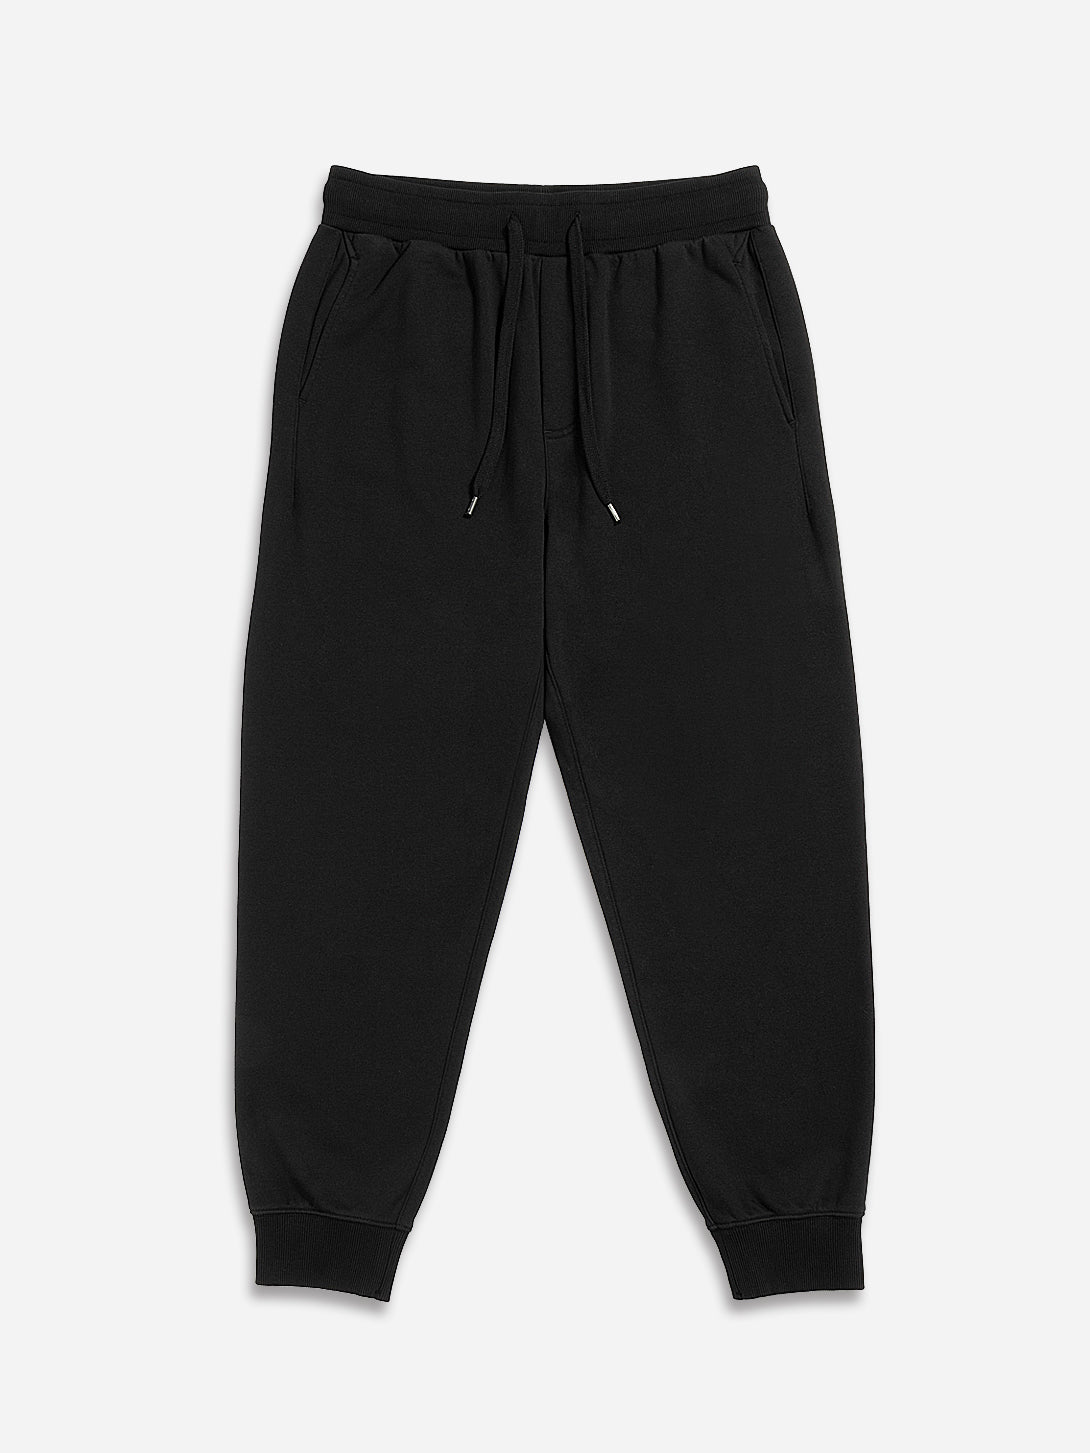 Black Bklyn Jogger O.N.S Clothing Menswear Joggers Sweatpants SS 22 Spring/Summer 22 NYC